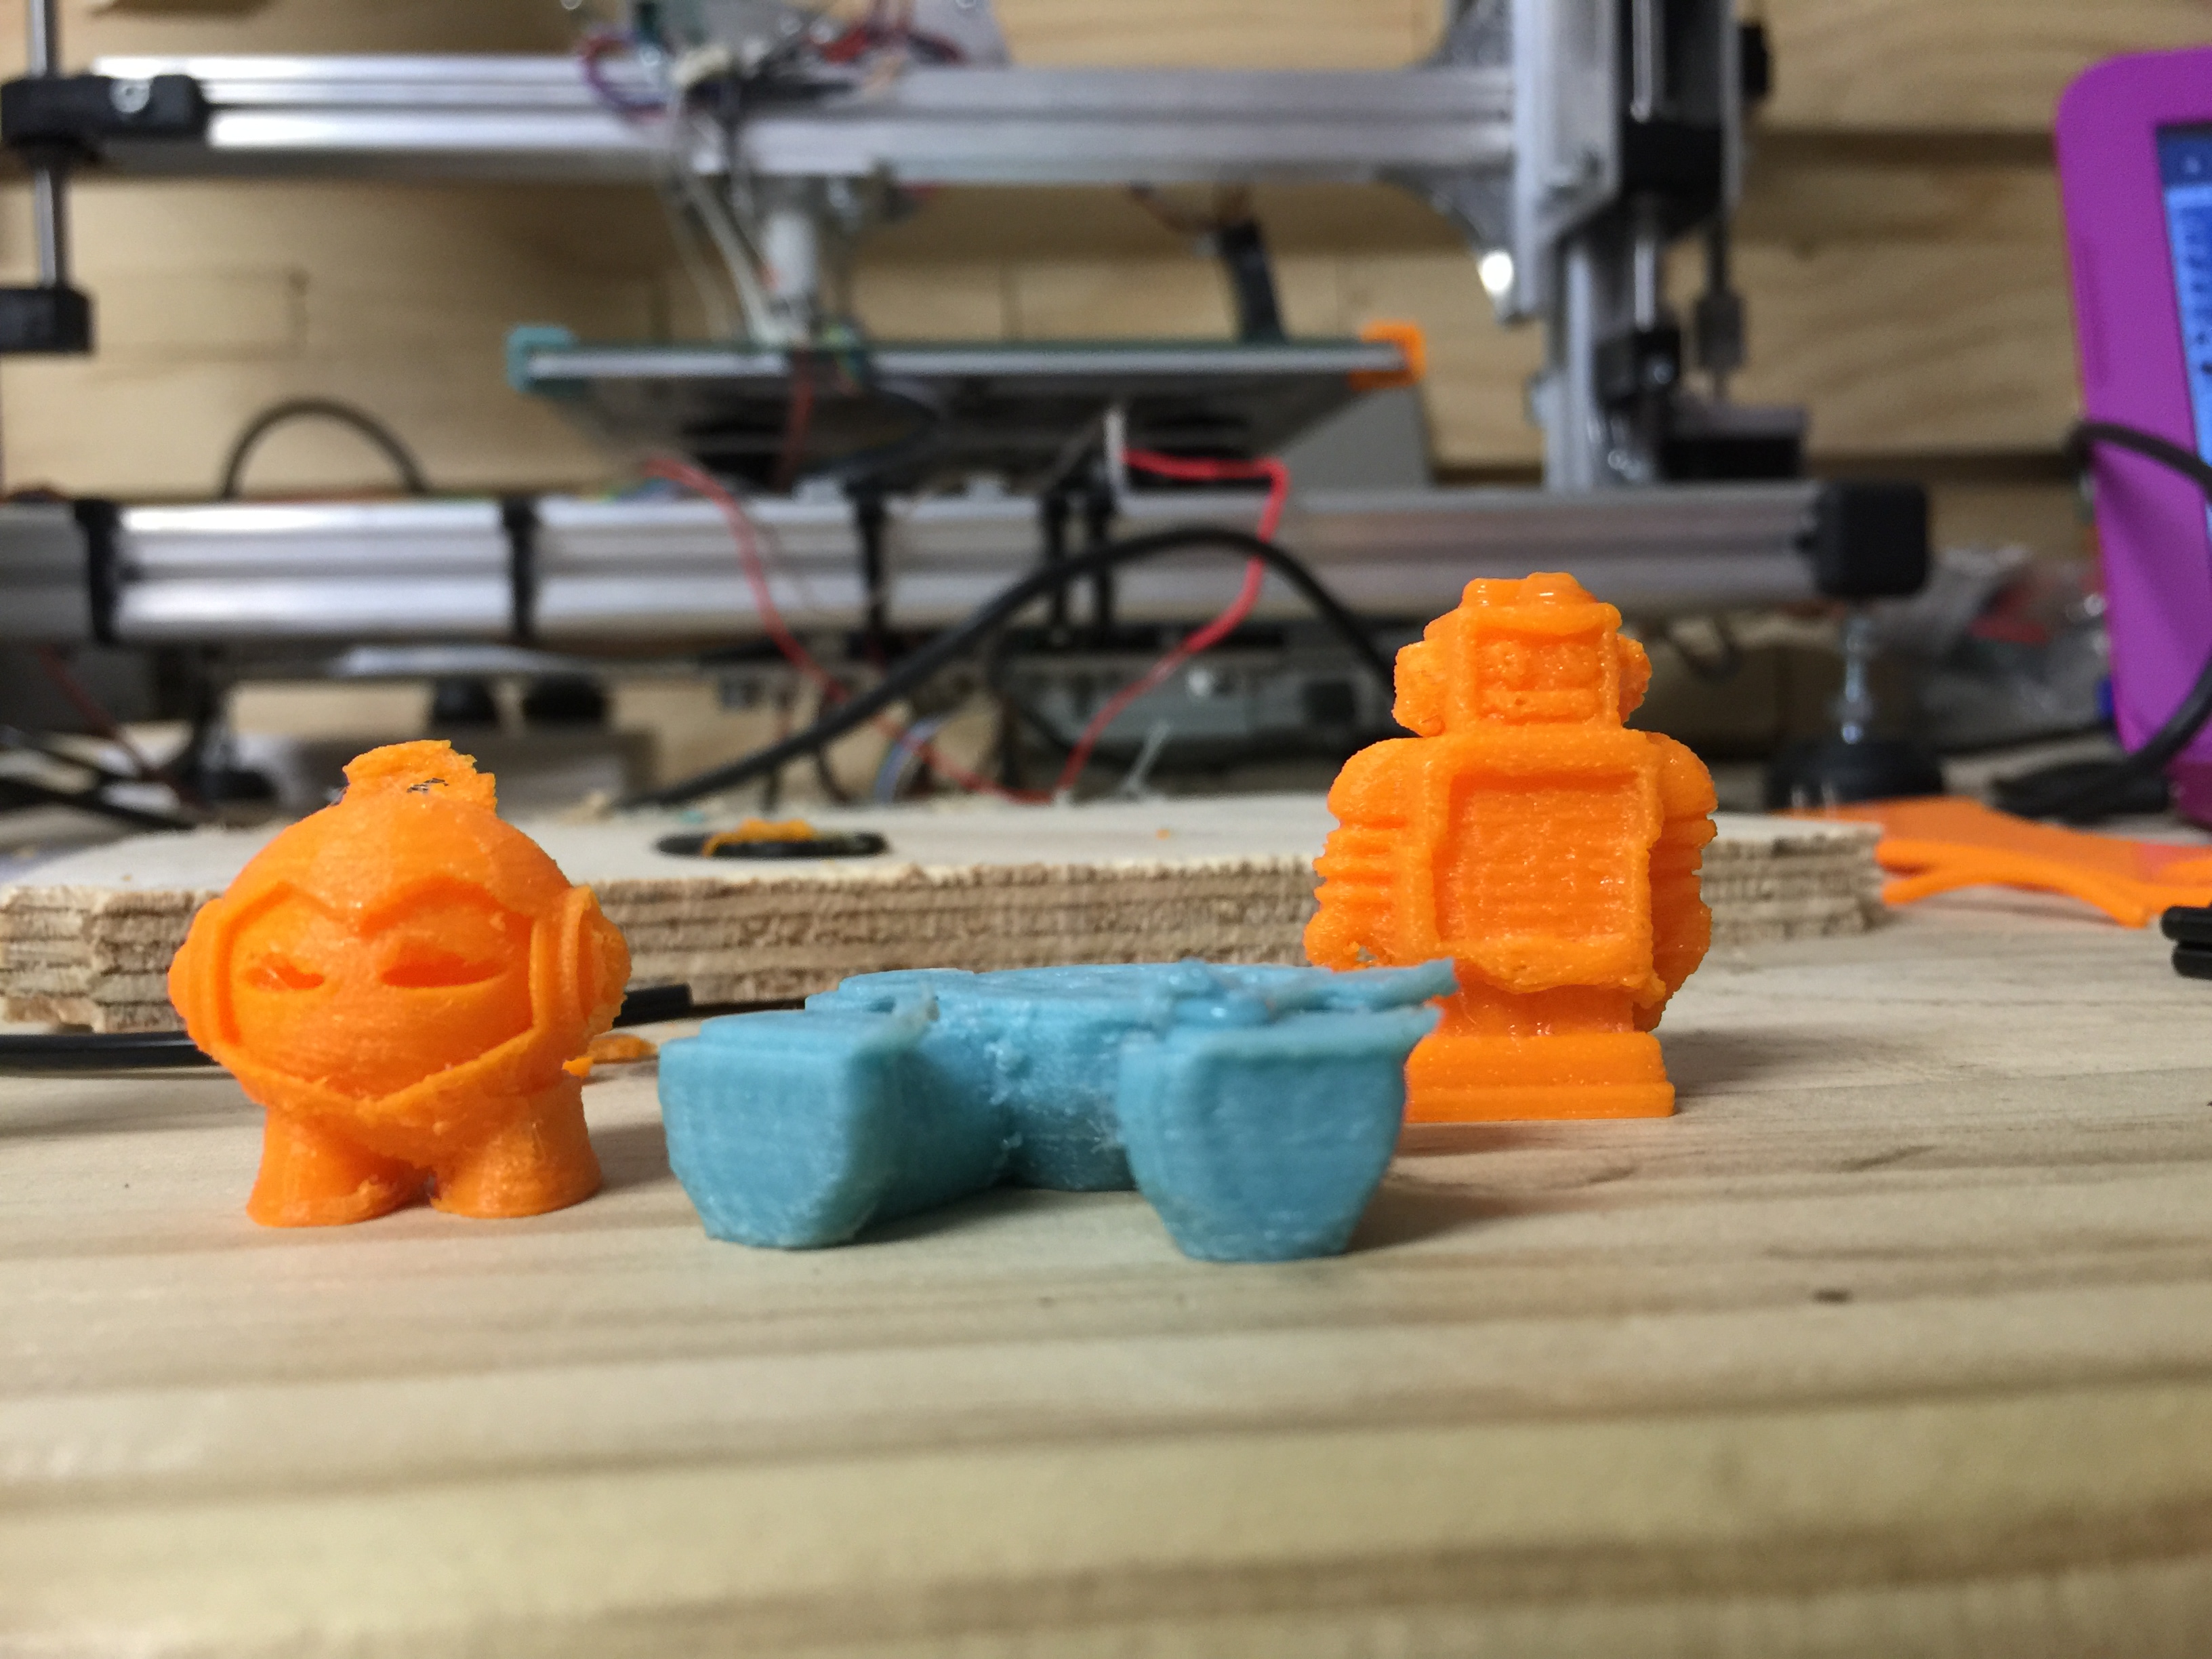 sikring død Periodisk K8200 skipping sideways - 3D Printing / 3D Printers - Talk Manufacturing |  Hubs